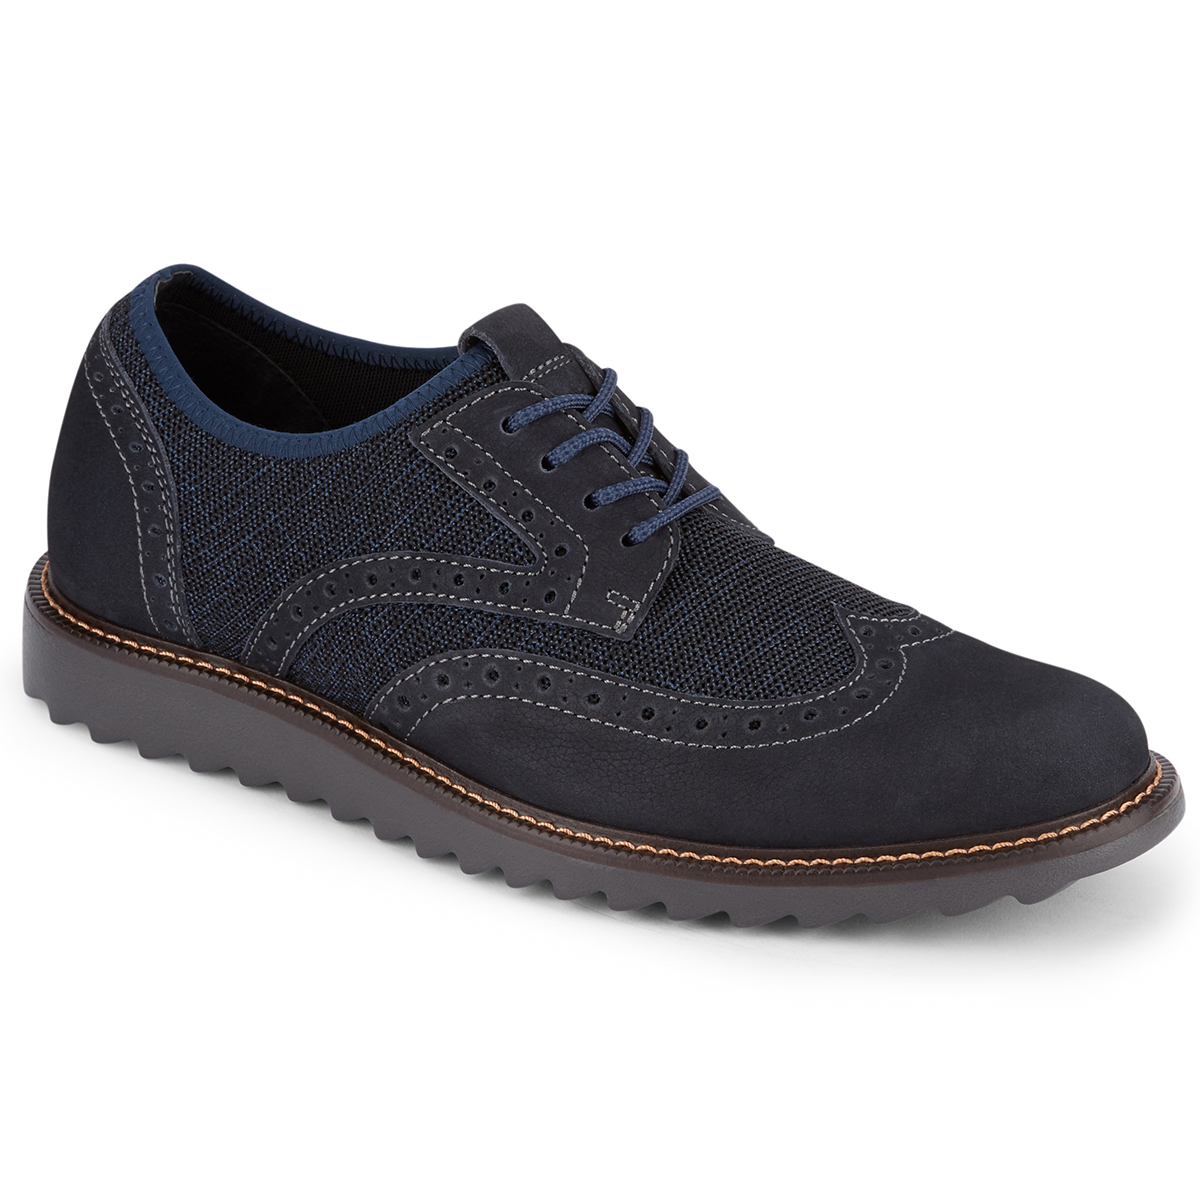 Dockers Men's Hawking Wingtip Shoes - Blue, 10